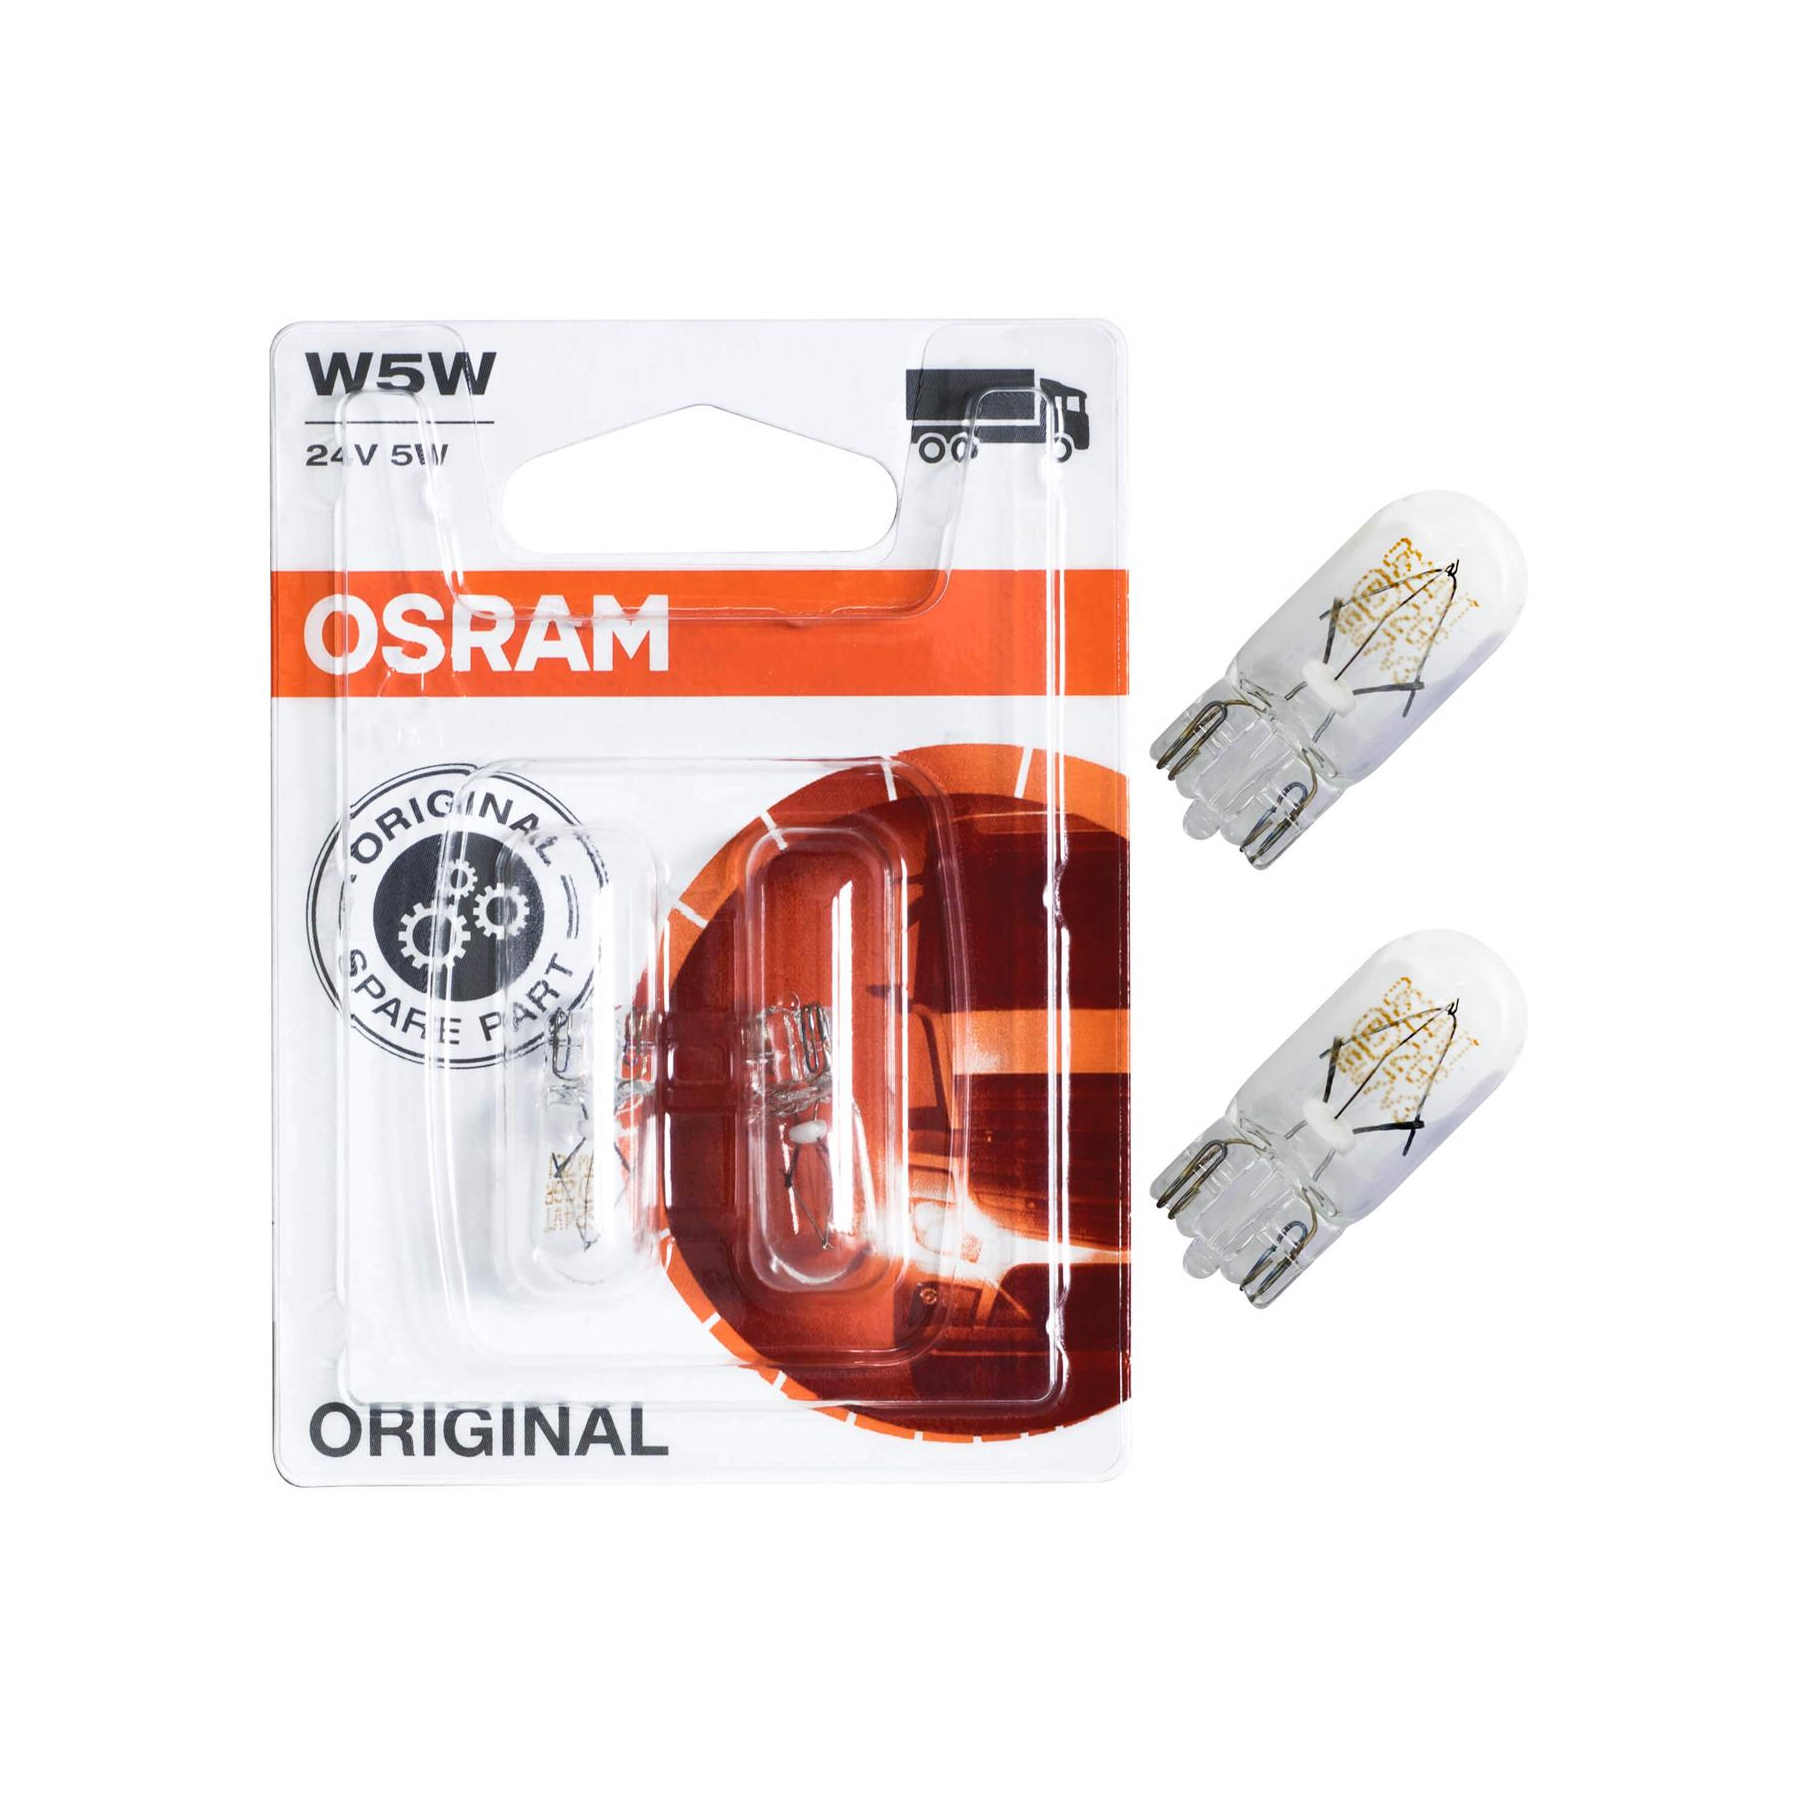 2 x signal lamps Original Line Osram W5W, 8,43 €